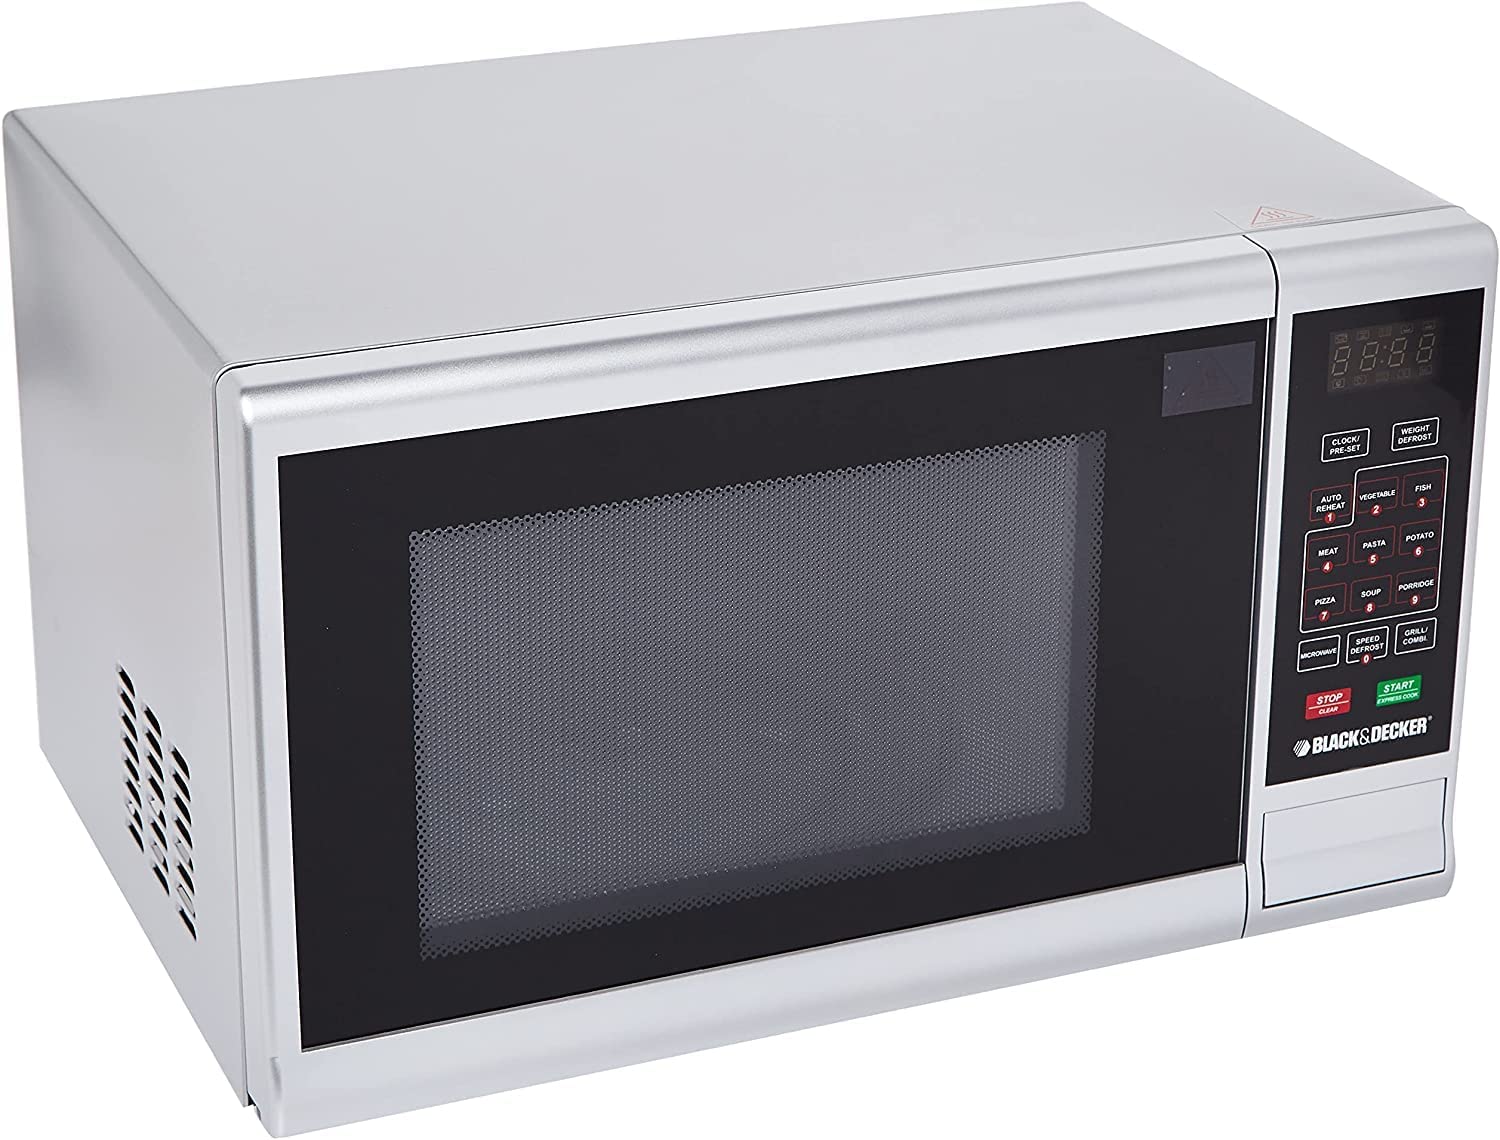 Black & Decker Microwave Oven | in Bahrain | Home Appliances | Halabh.com